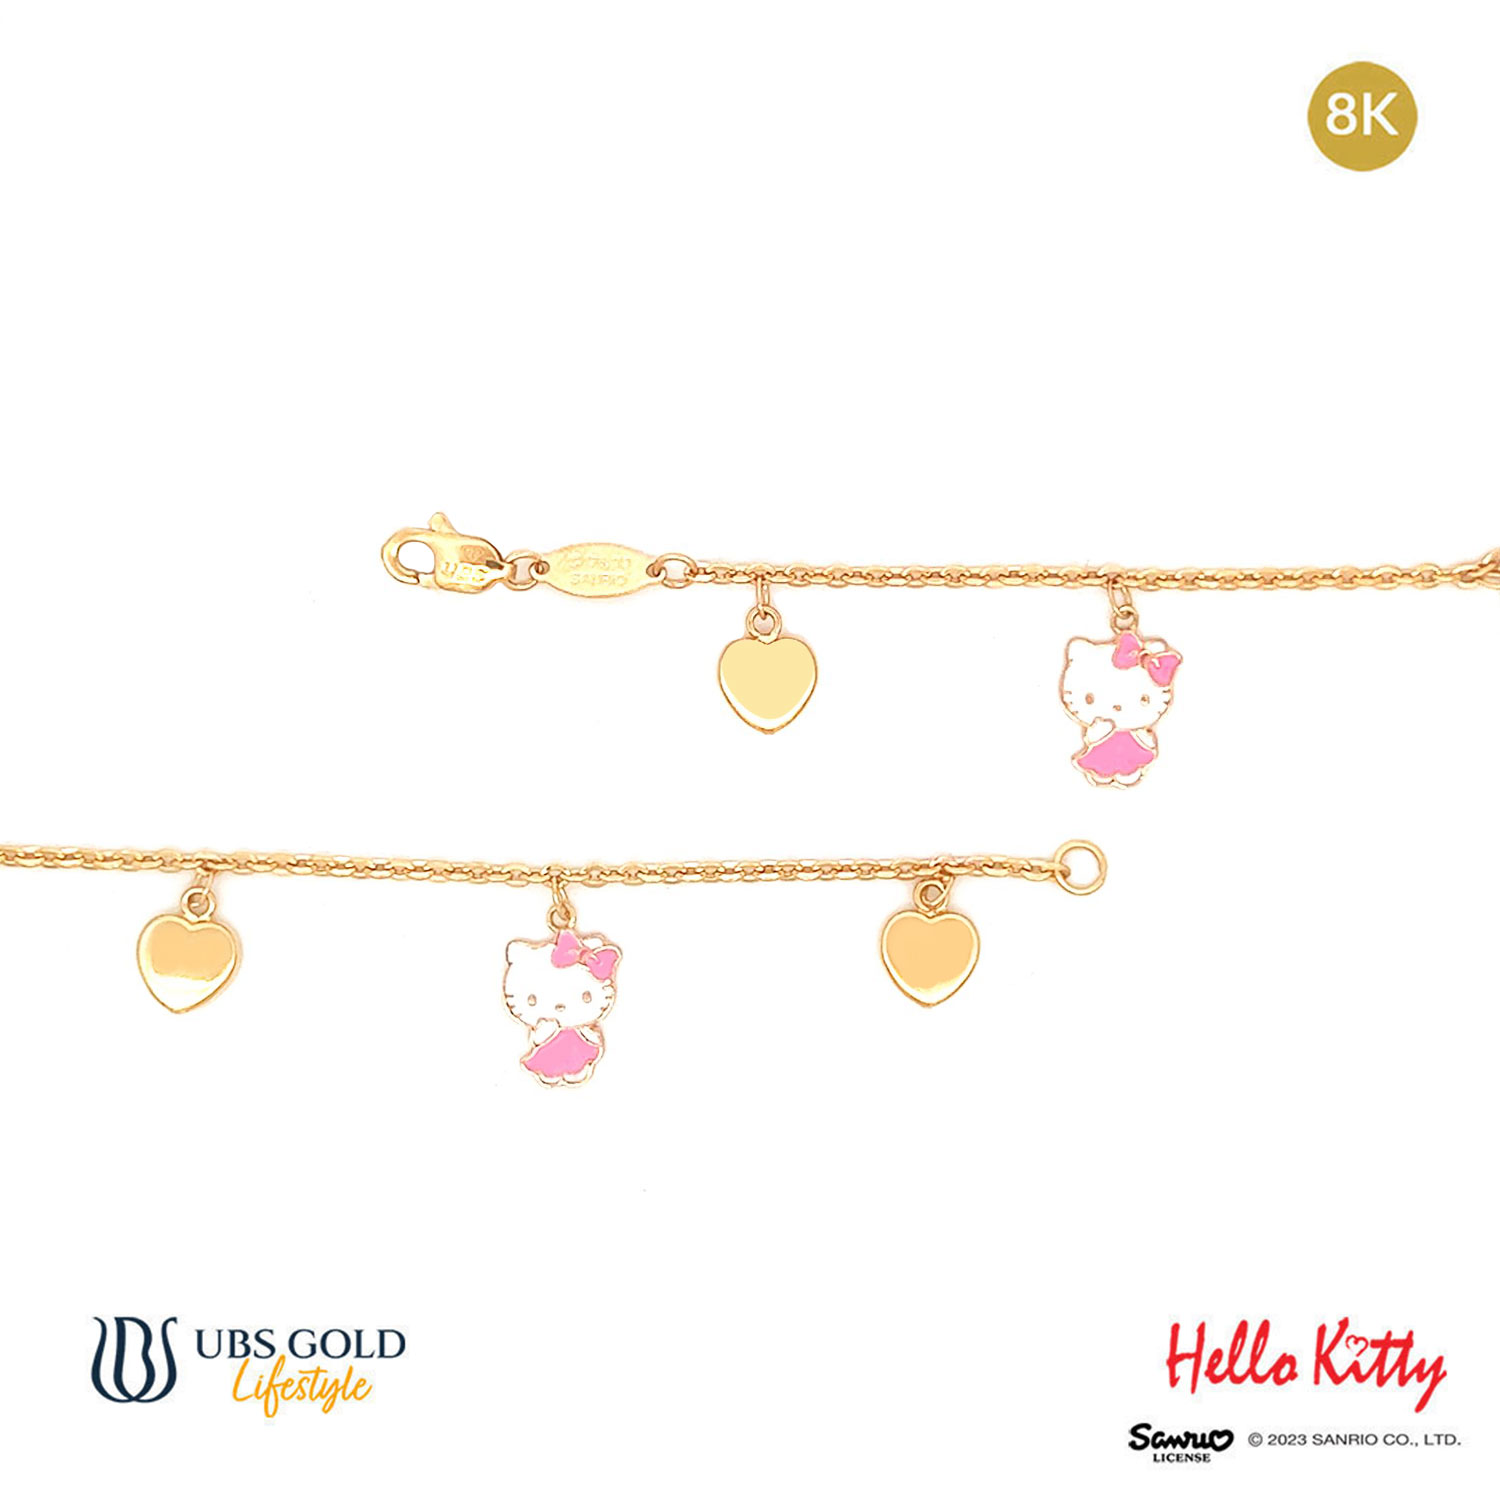 UBS Gelang Emas Anak Sanrio Hello Kitty - Hgz0007 - 8K